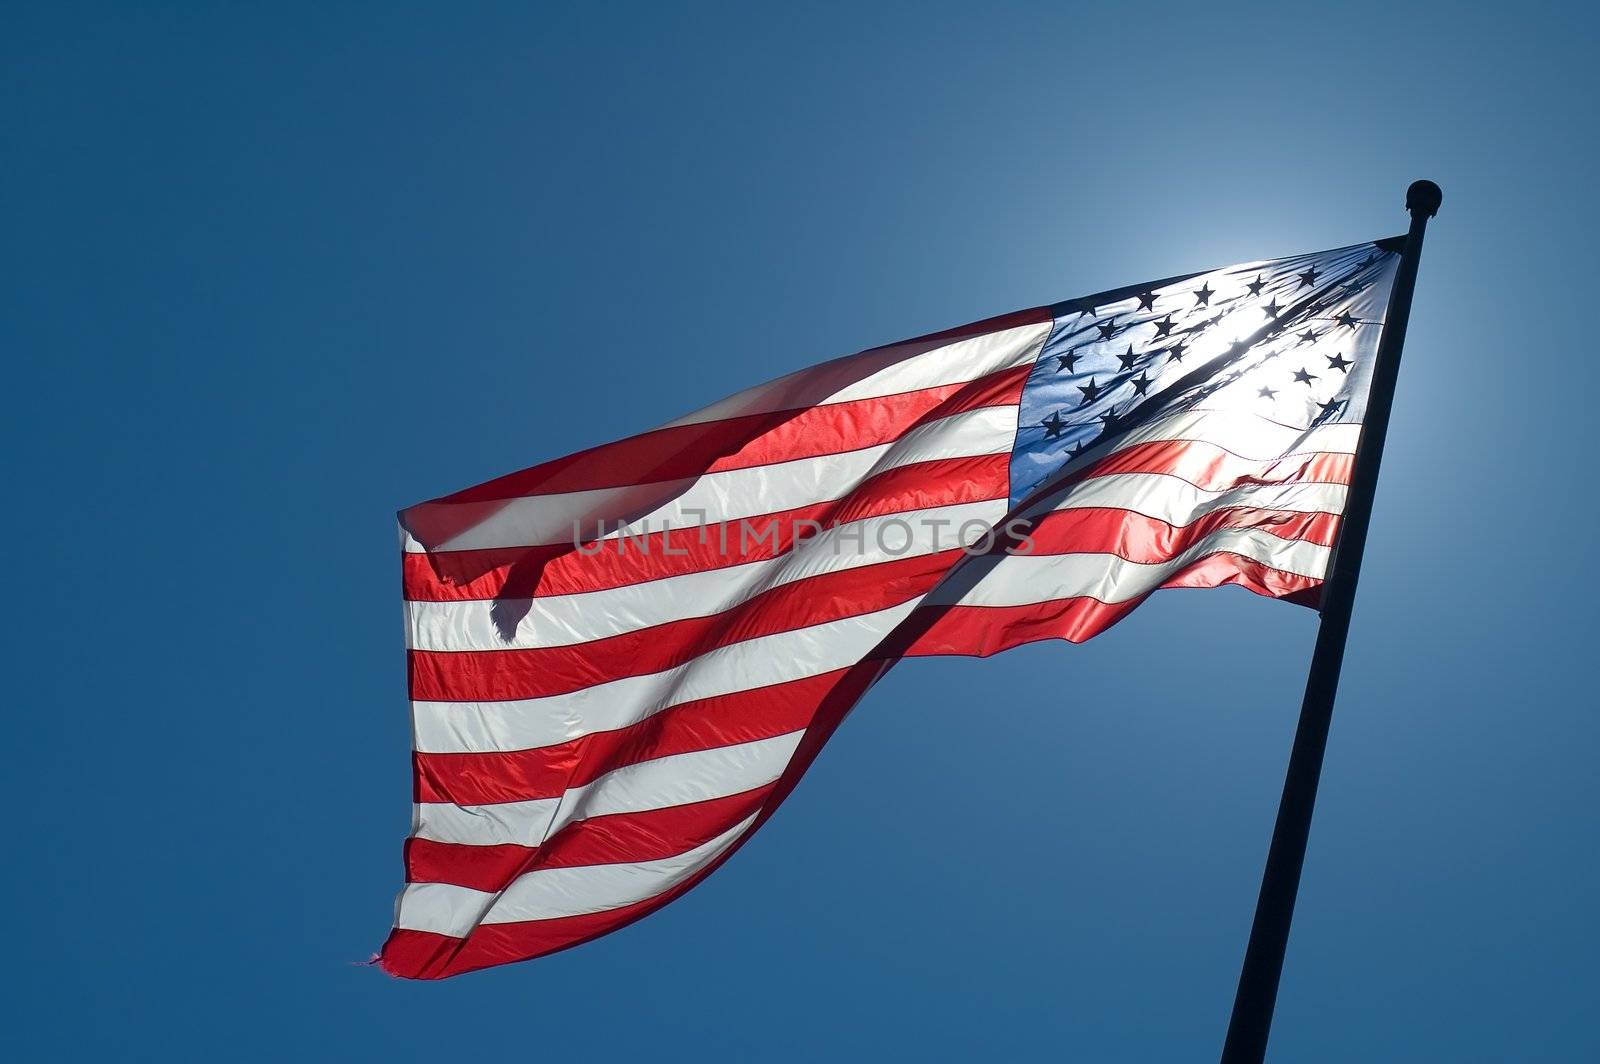 back lighted american flag, clear blue sky